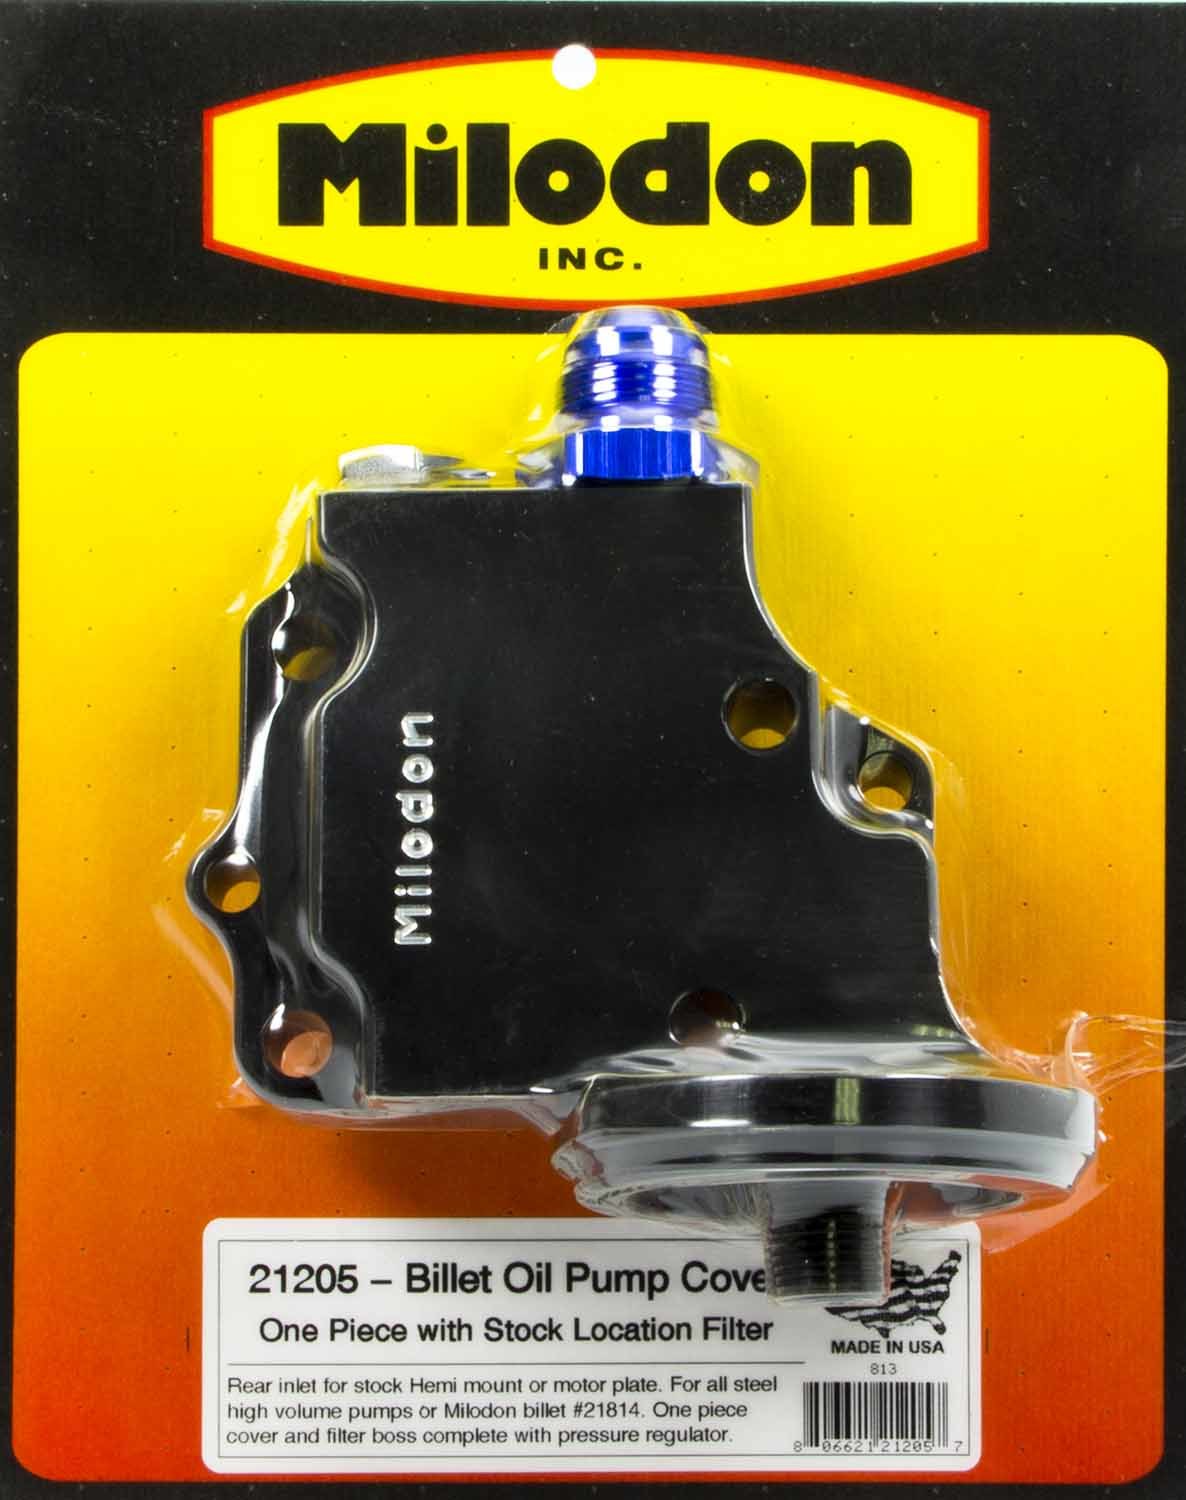 Milidon 21205 Oil Pump Cover, Stock Oil Filter Location, Fittings Included, Billet Aluminum, Black Anodized, Oil System, Mopar 426 Hemi, Each